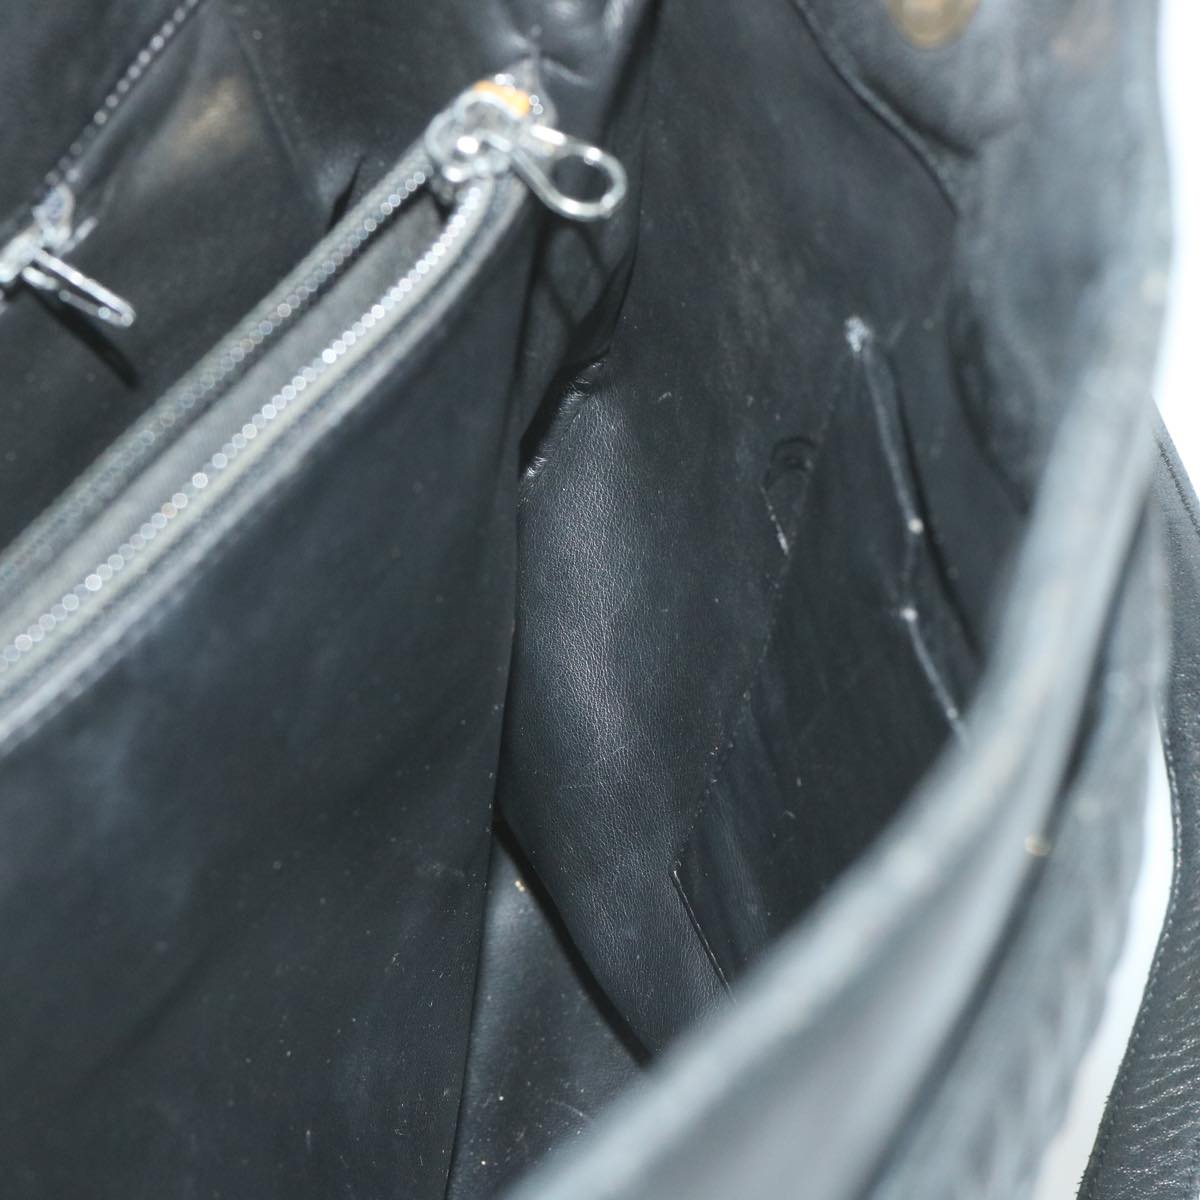 BALLY Matelasse Shoulder Bag Leather Black Auth ki3695